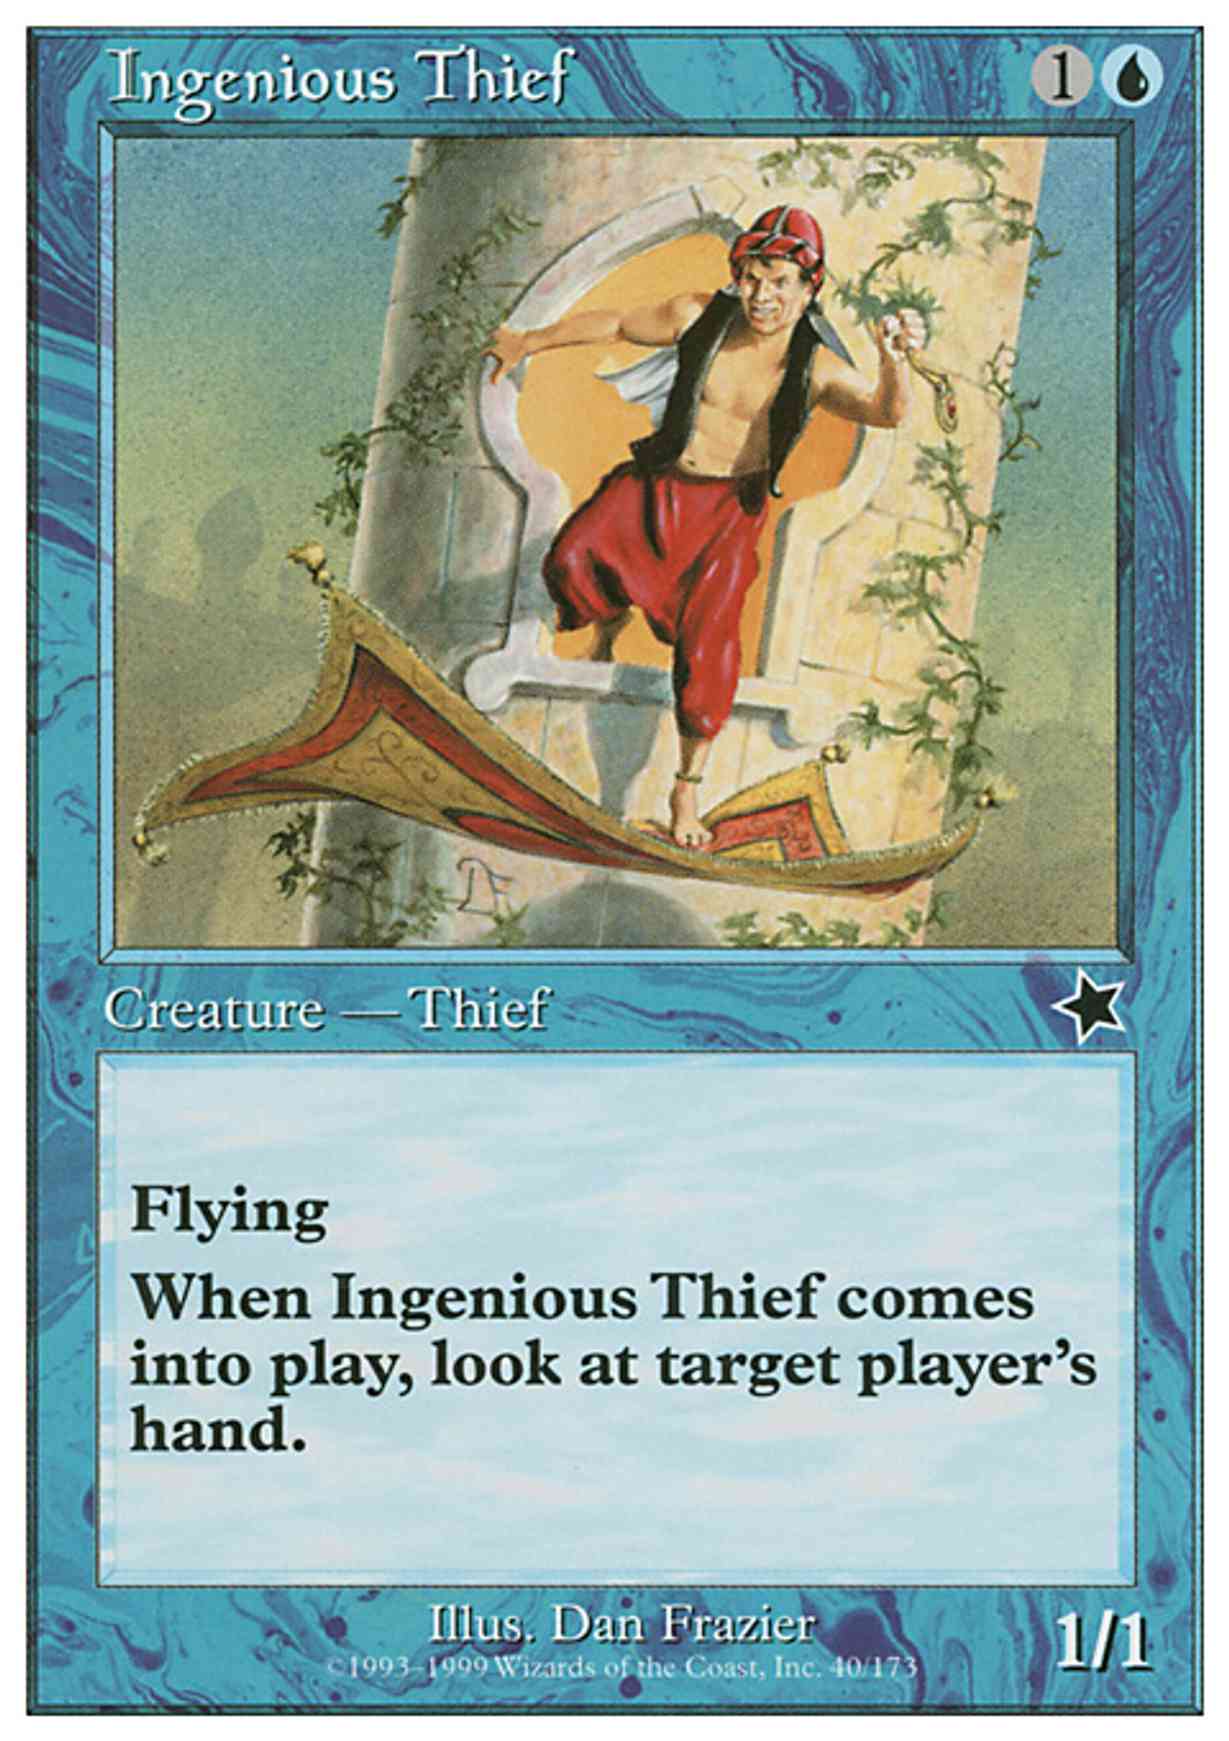 Ingenious Thief magic card front